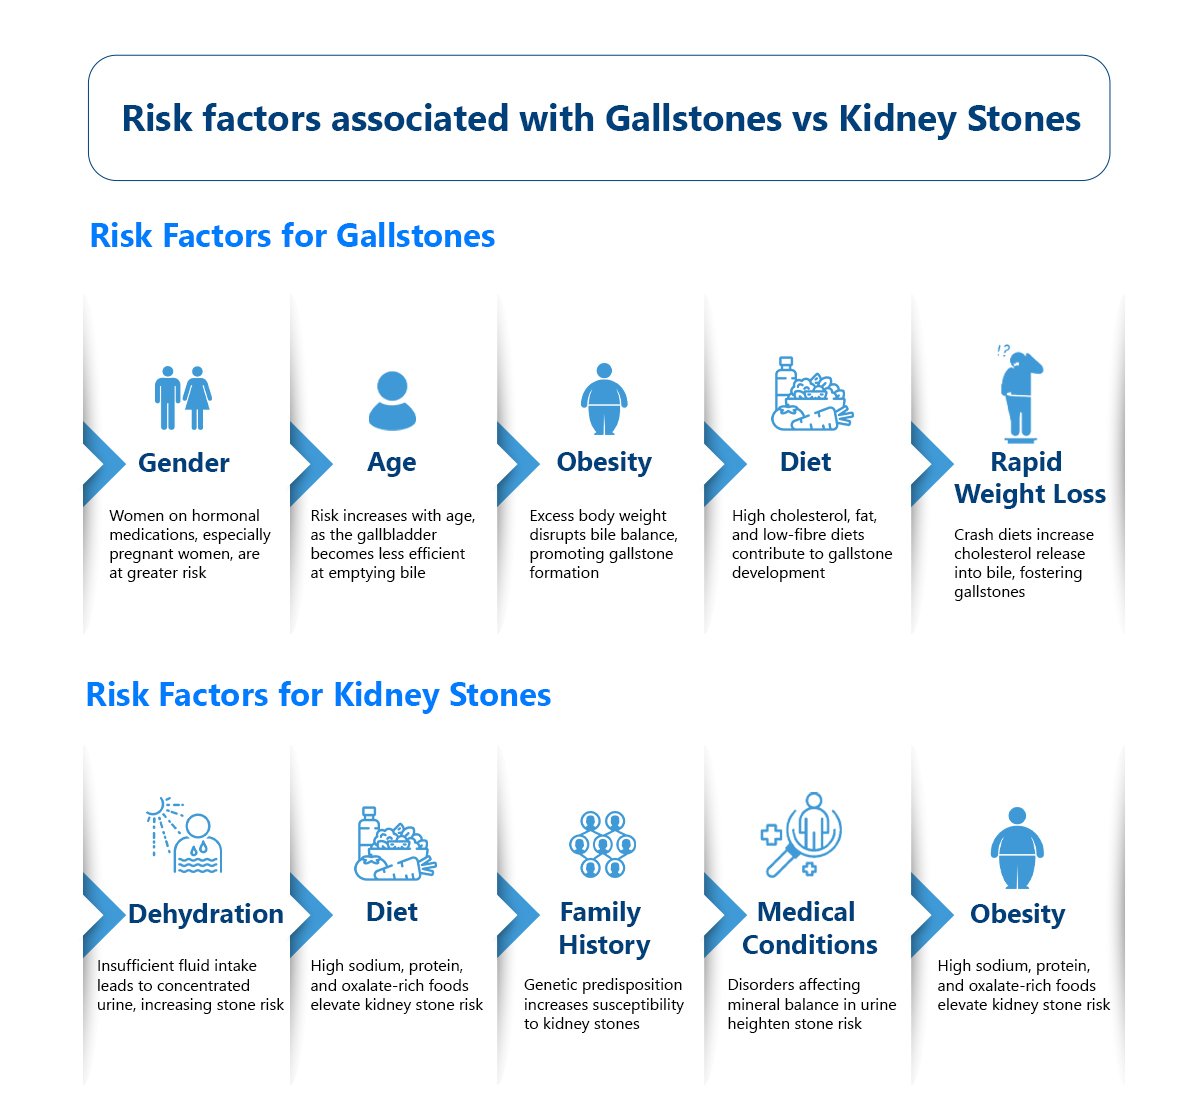 The Risk factors associated with Gallstones vs Kidney Stones